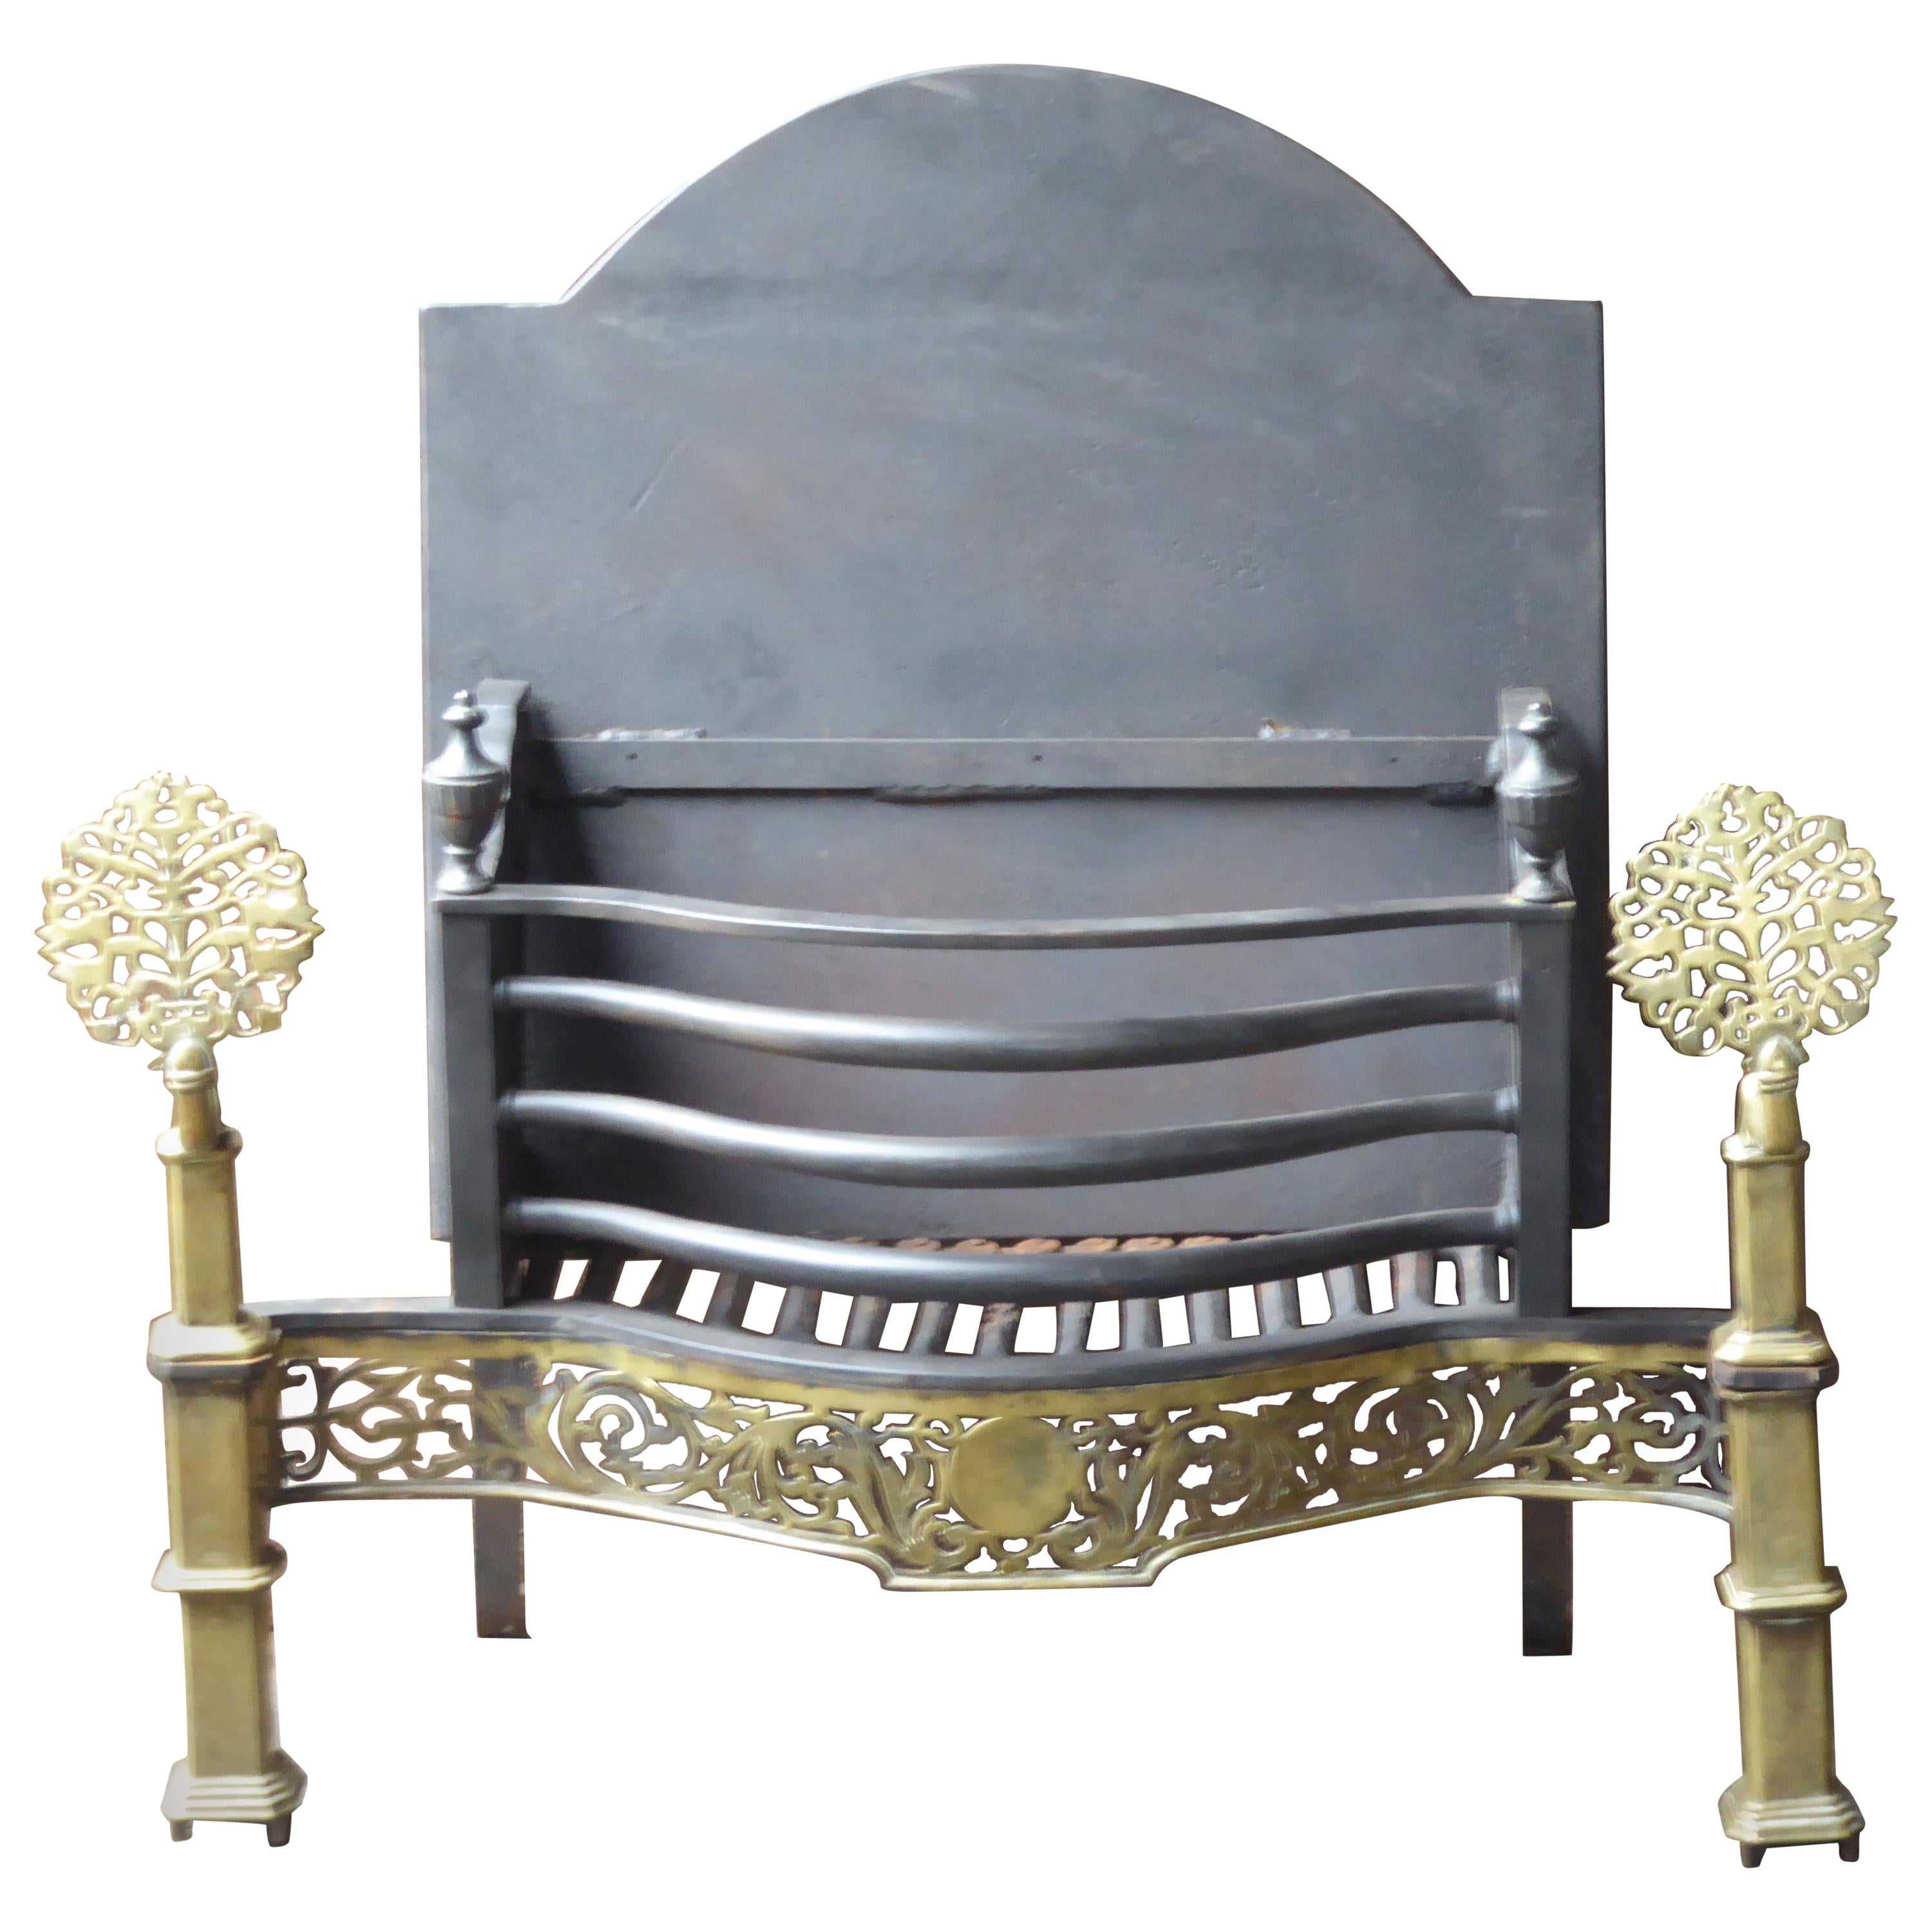 Exquisite English Art Nouveau Fireplace Grate, Fire Grate